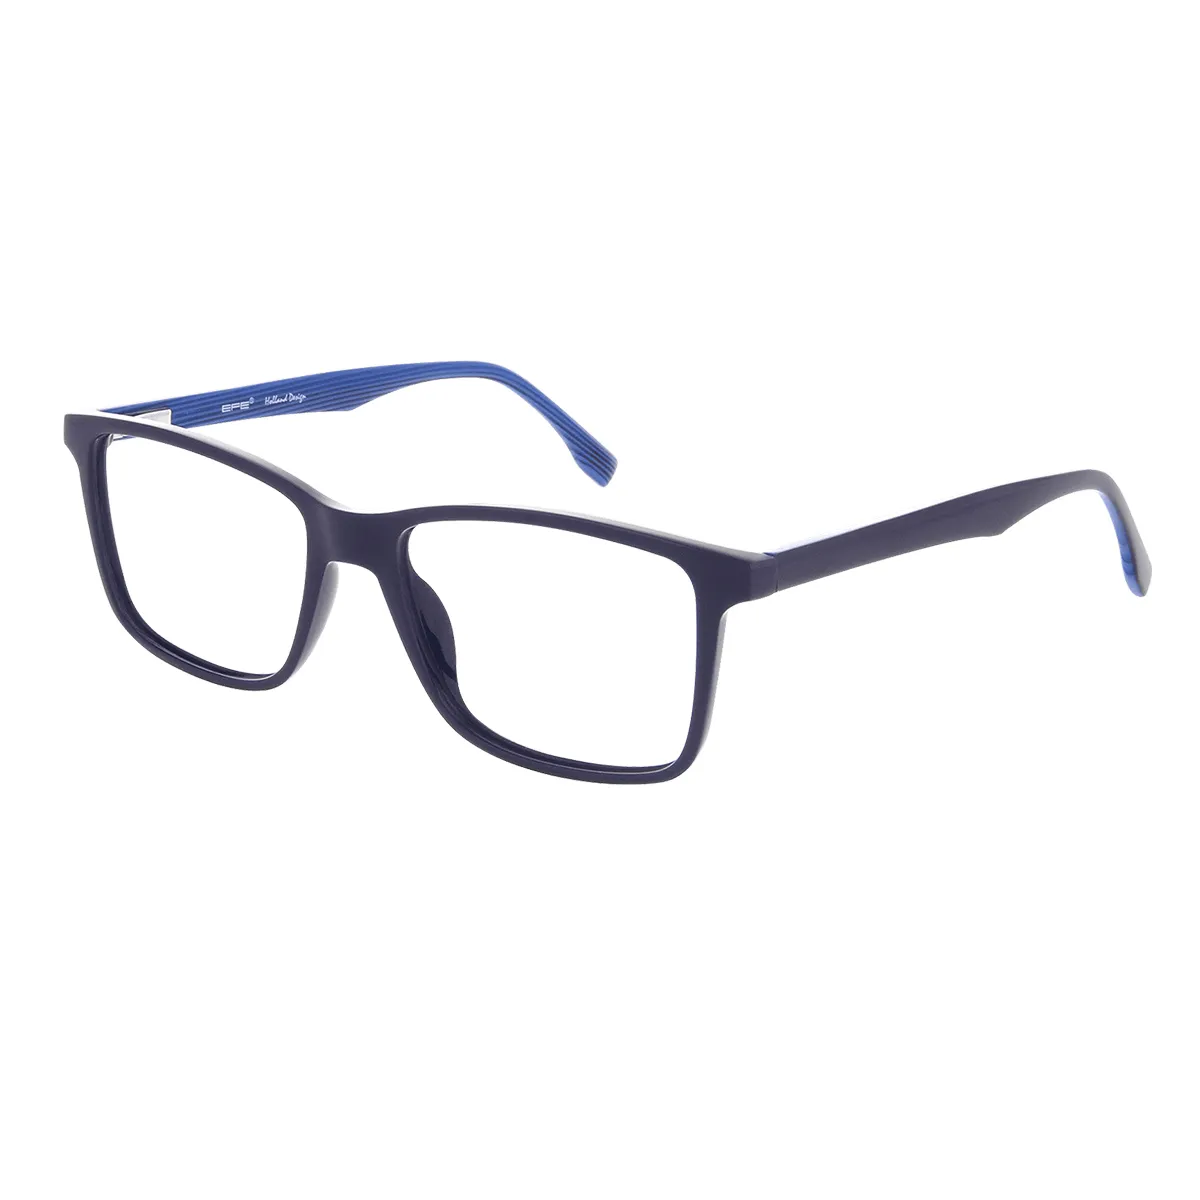 Decker - Square Blue Glasses for Men - EFE